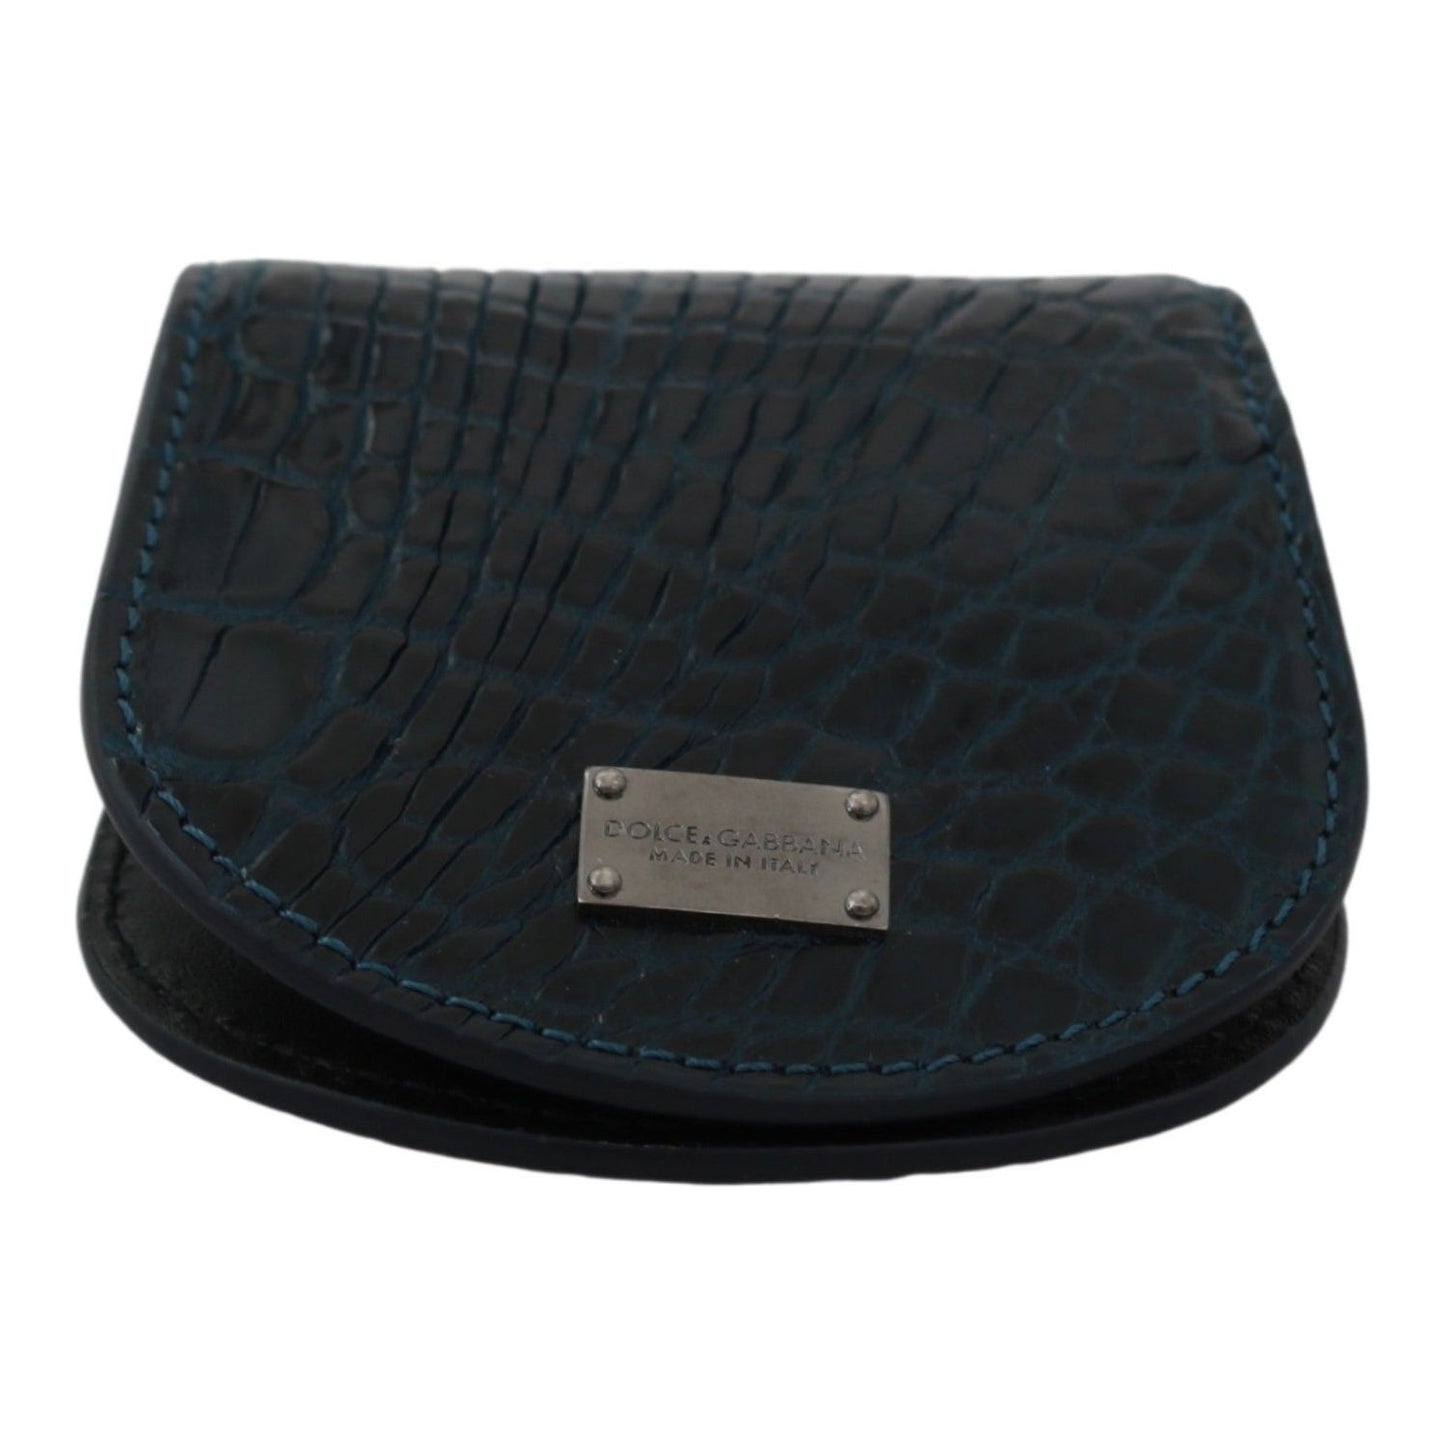 Dolce & Gabbana Exquisite Dark Blue Coin Case Wallet Condom Case blue-exotic-skins-condom-case-holder-pocket IMG_0250-9c1282d7-980.jpg